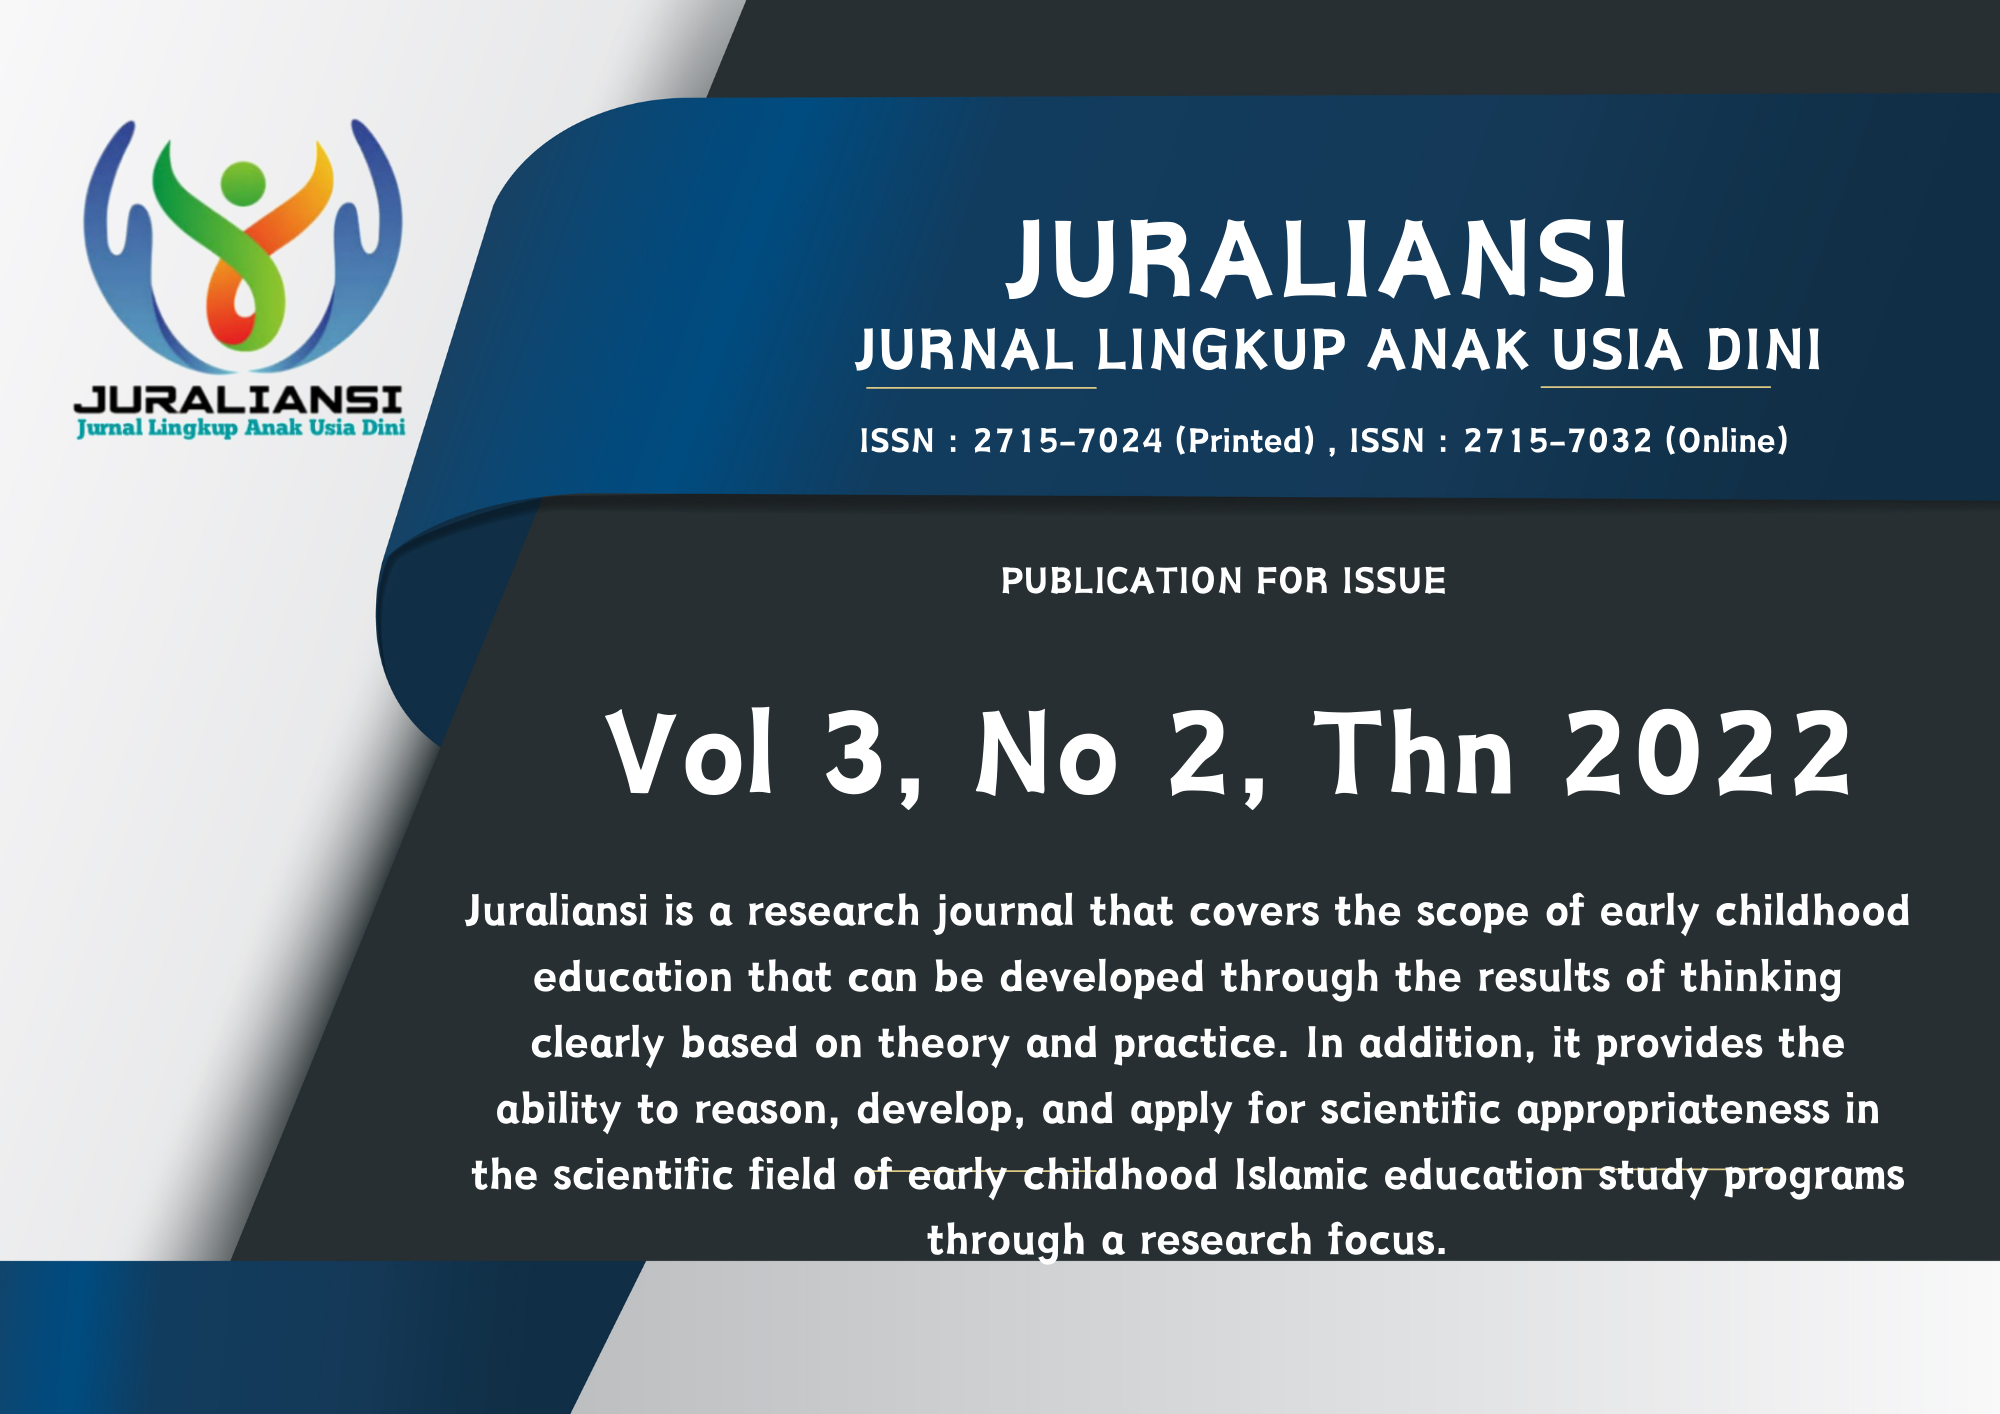 					View Vol. 3 No. 2 (2022): JURALIANSI (JURNAL LINGKUP ANAK USIA DINI)
				